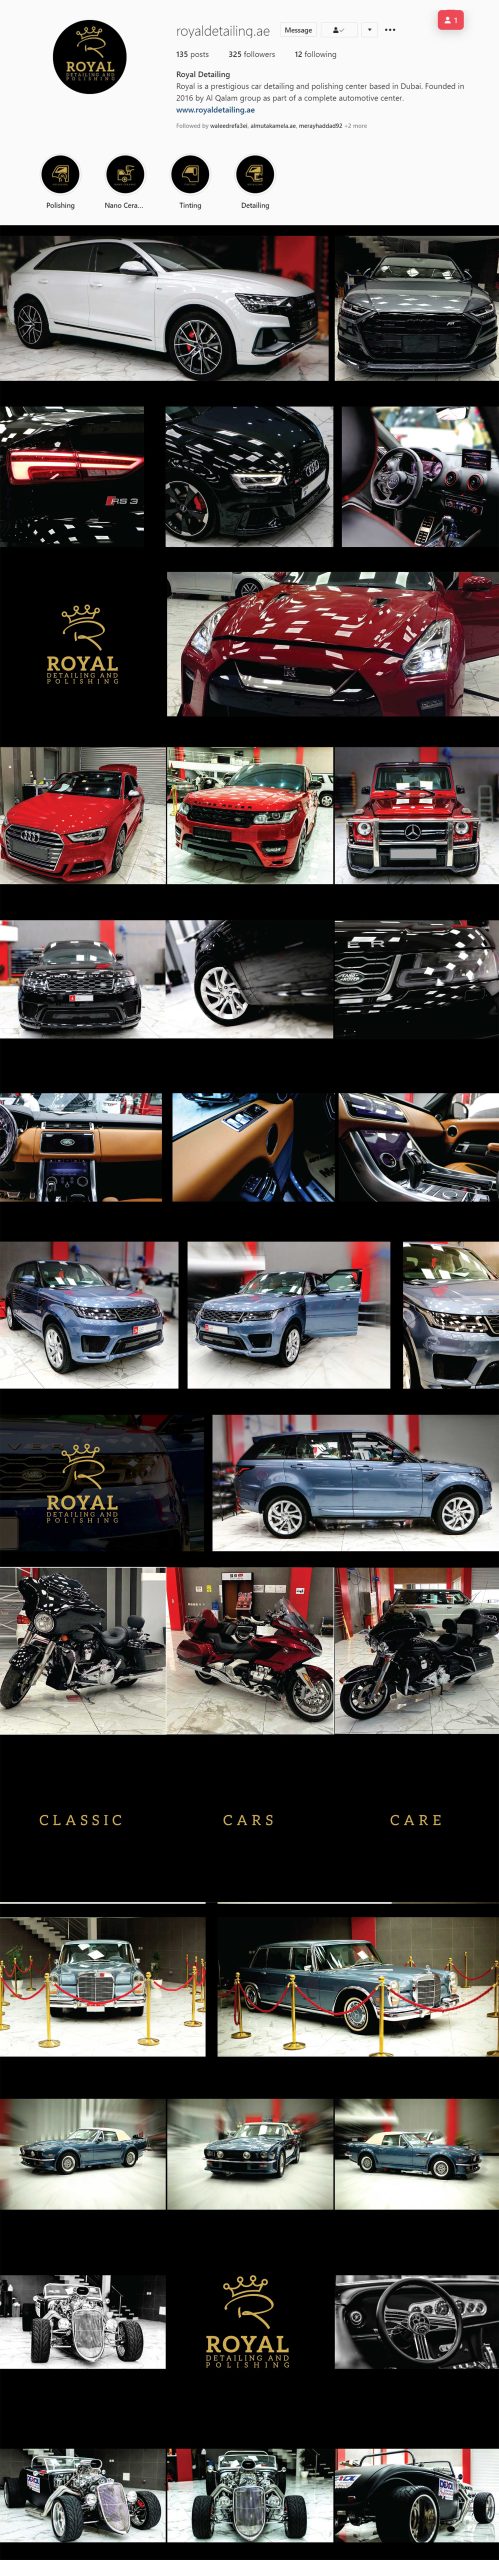 Instagram feed for Royal Car - 360beats portfolio